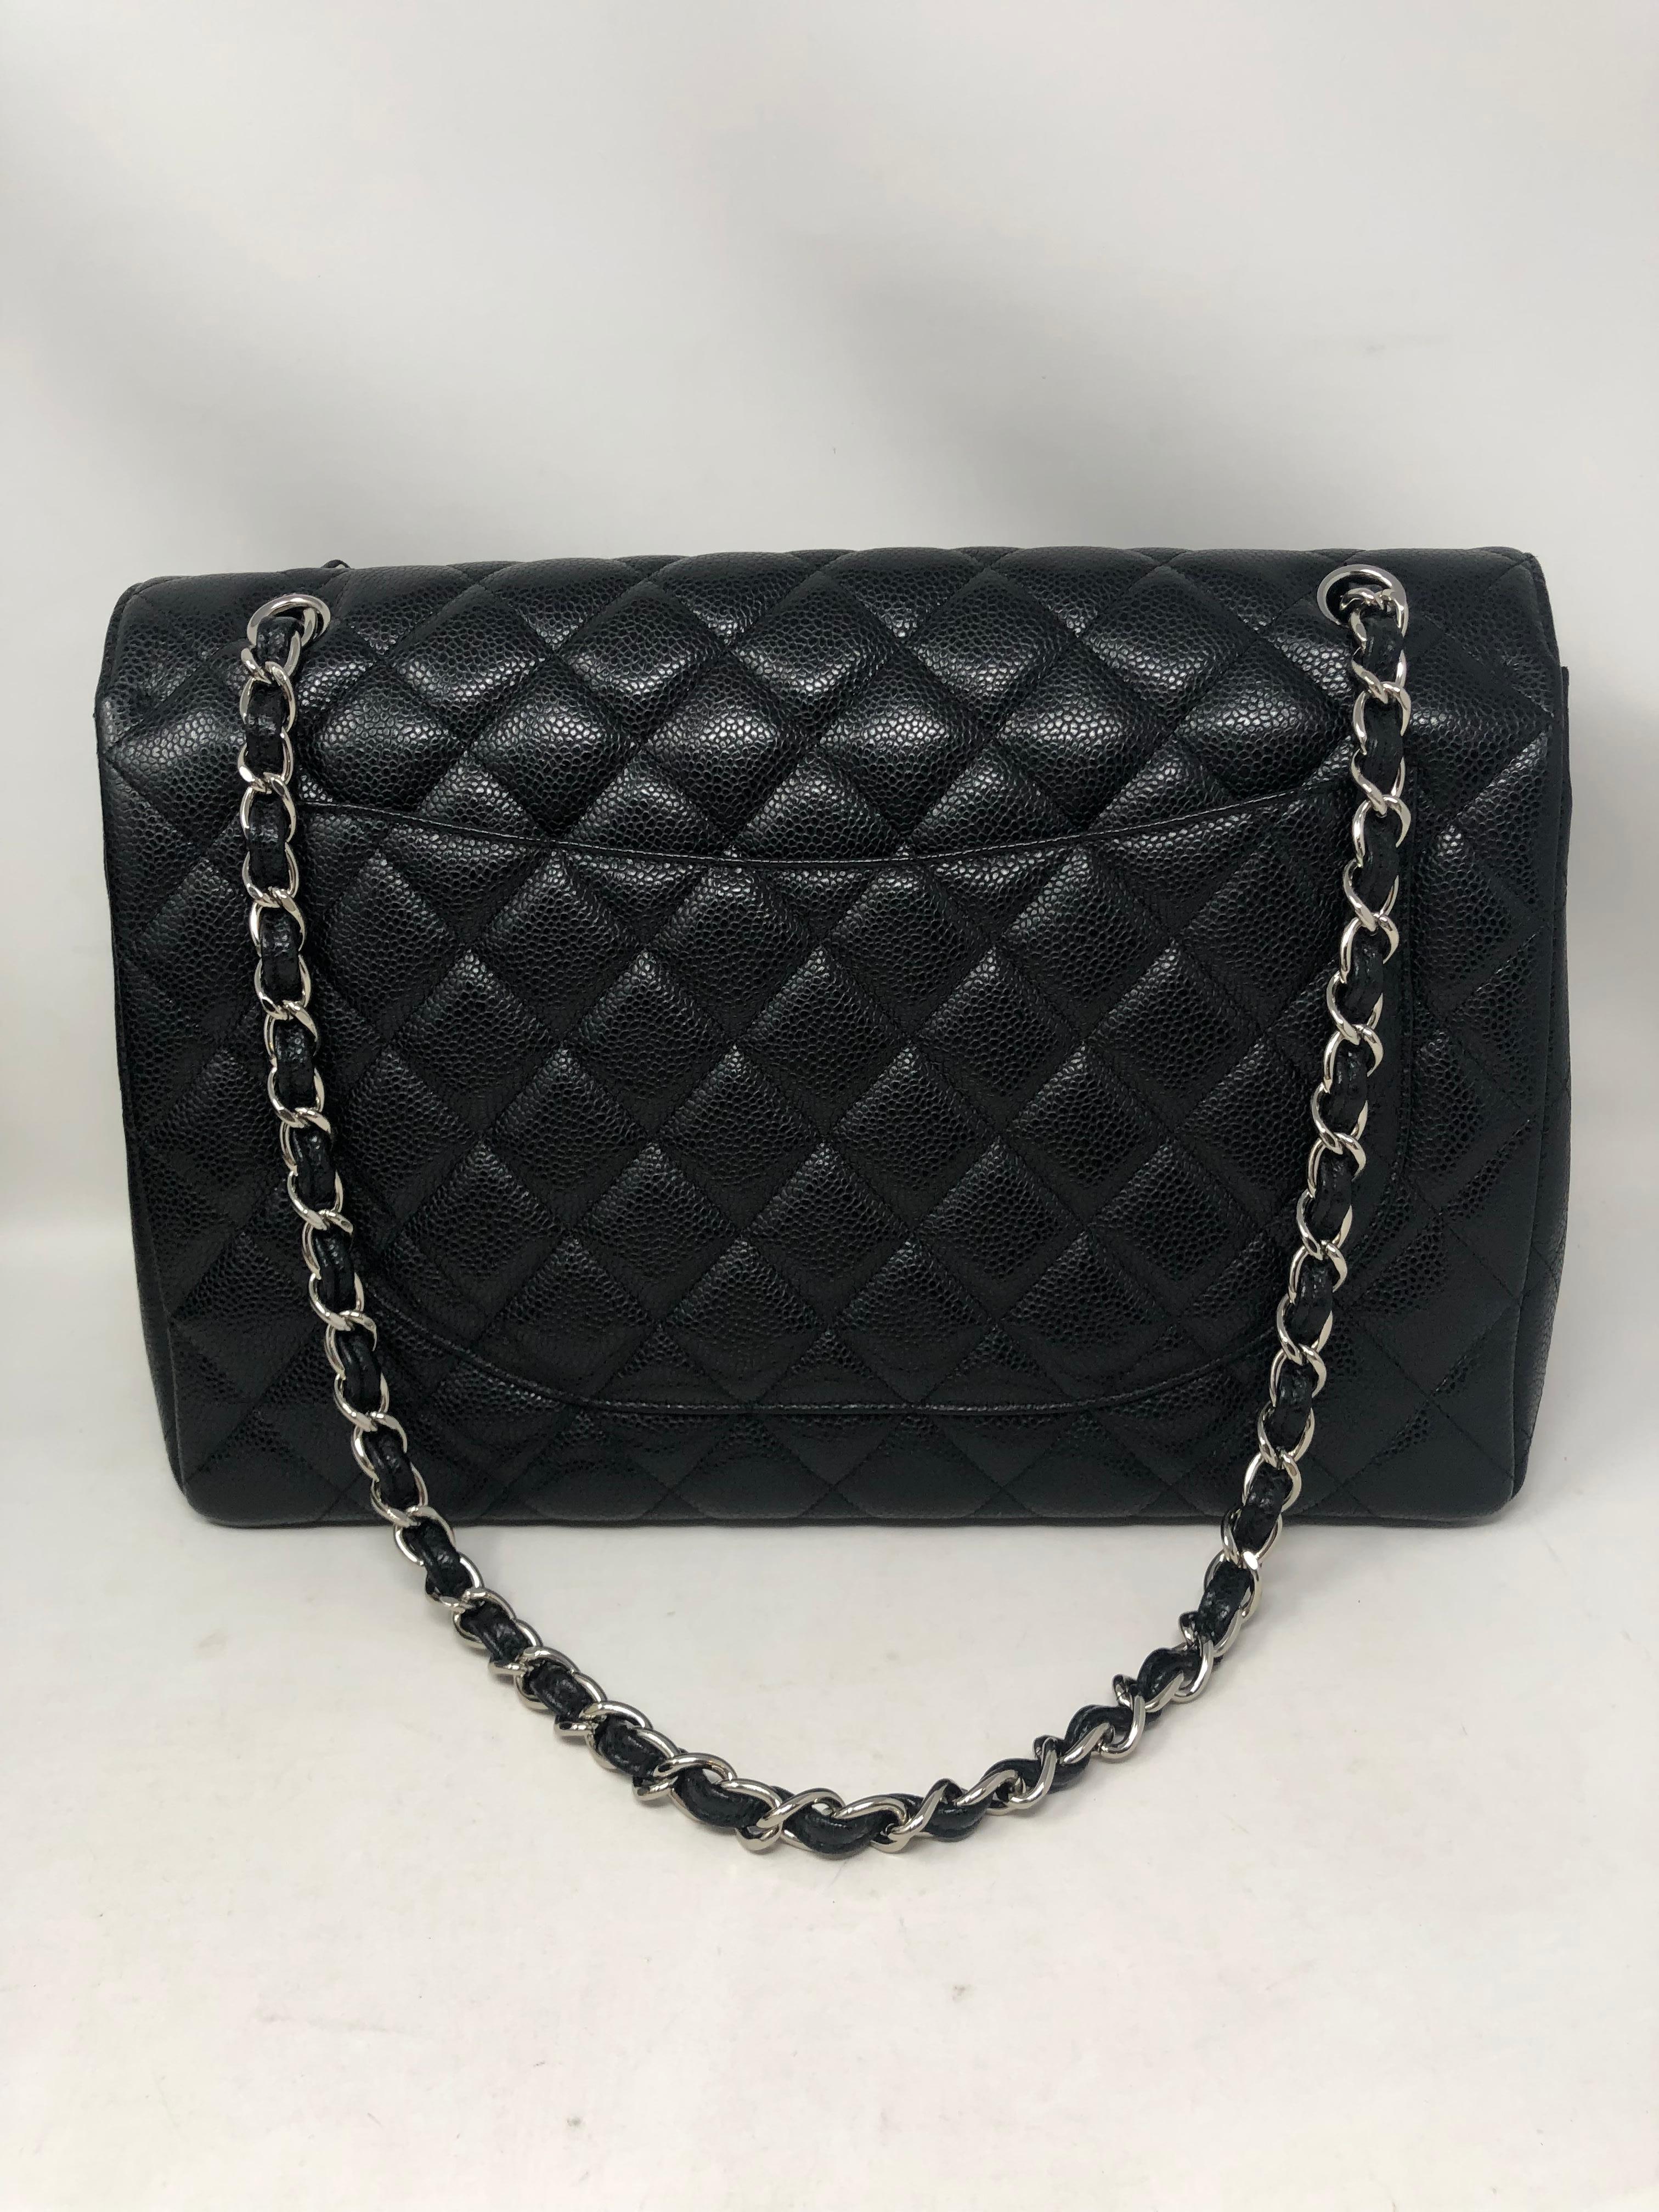 Women's or Men's Chanel Black Caviar Leather Maxi Bag